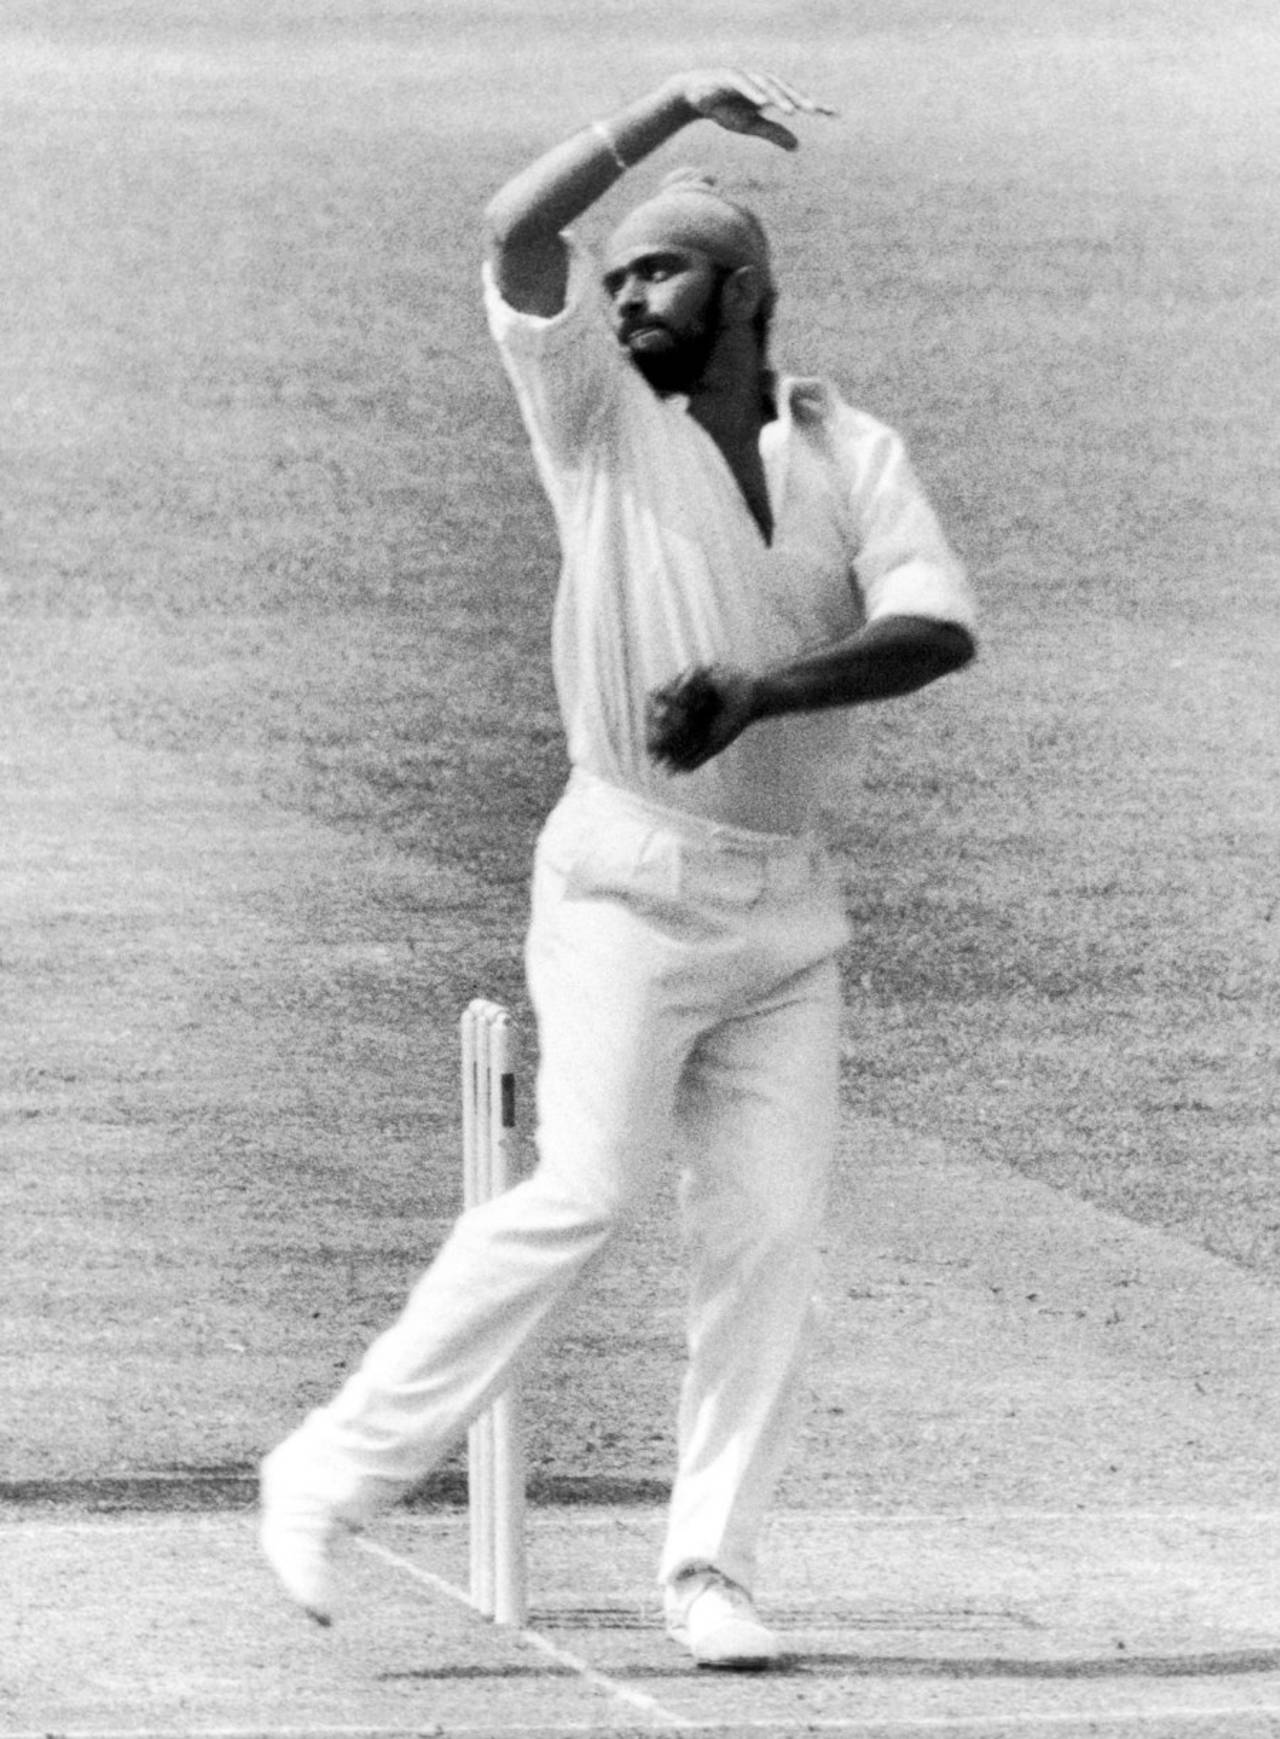 Bishan Bedi in his delivery stride, June 1974